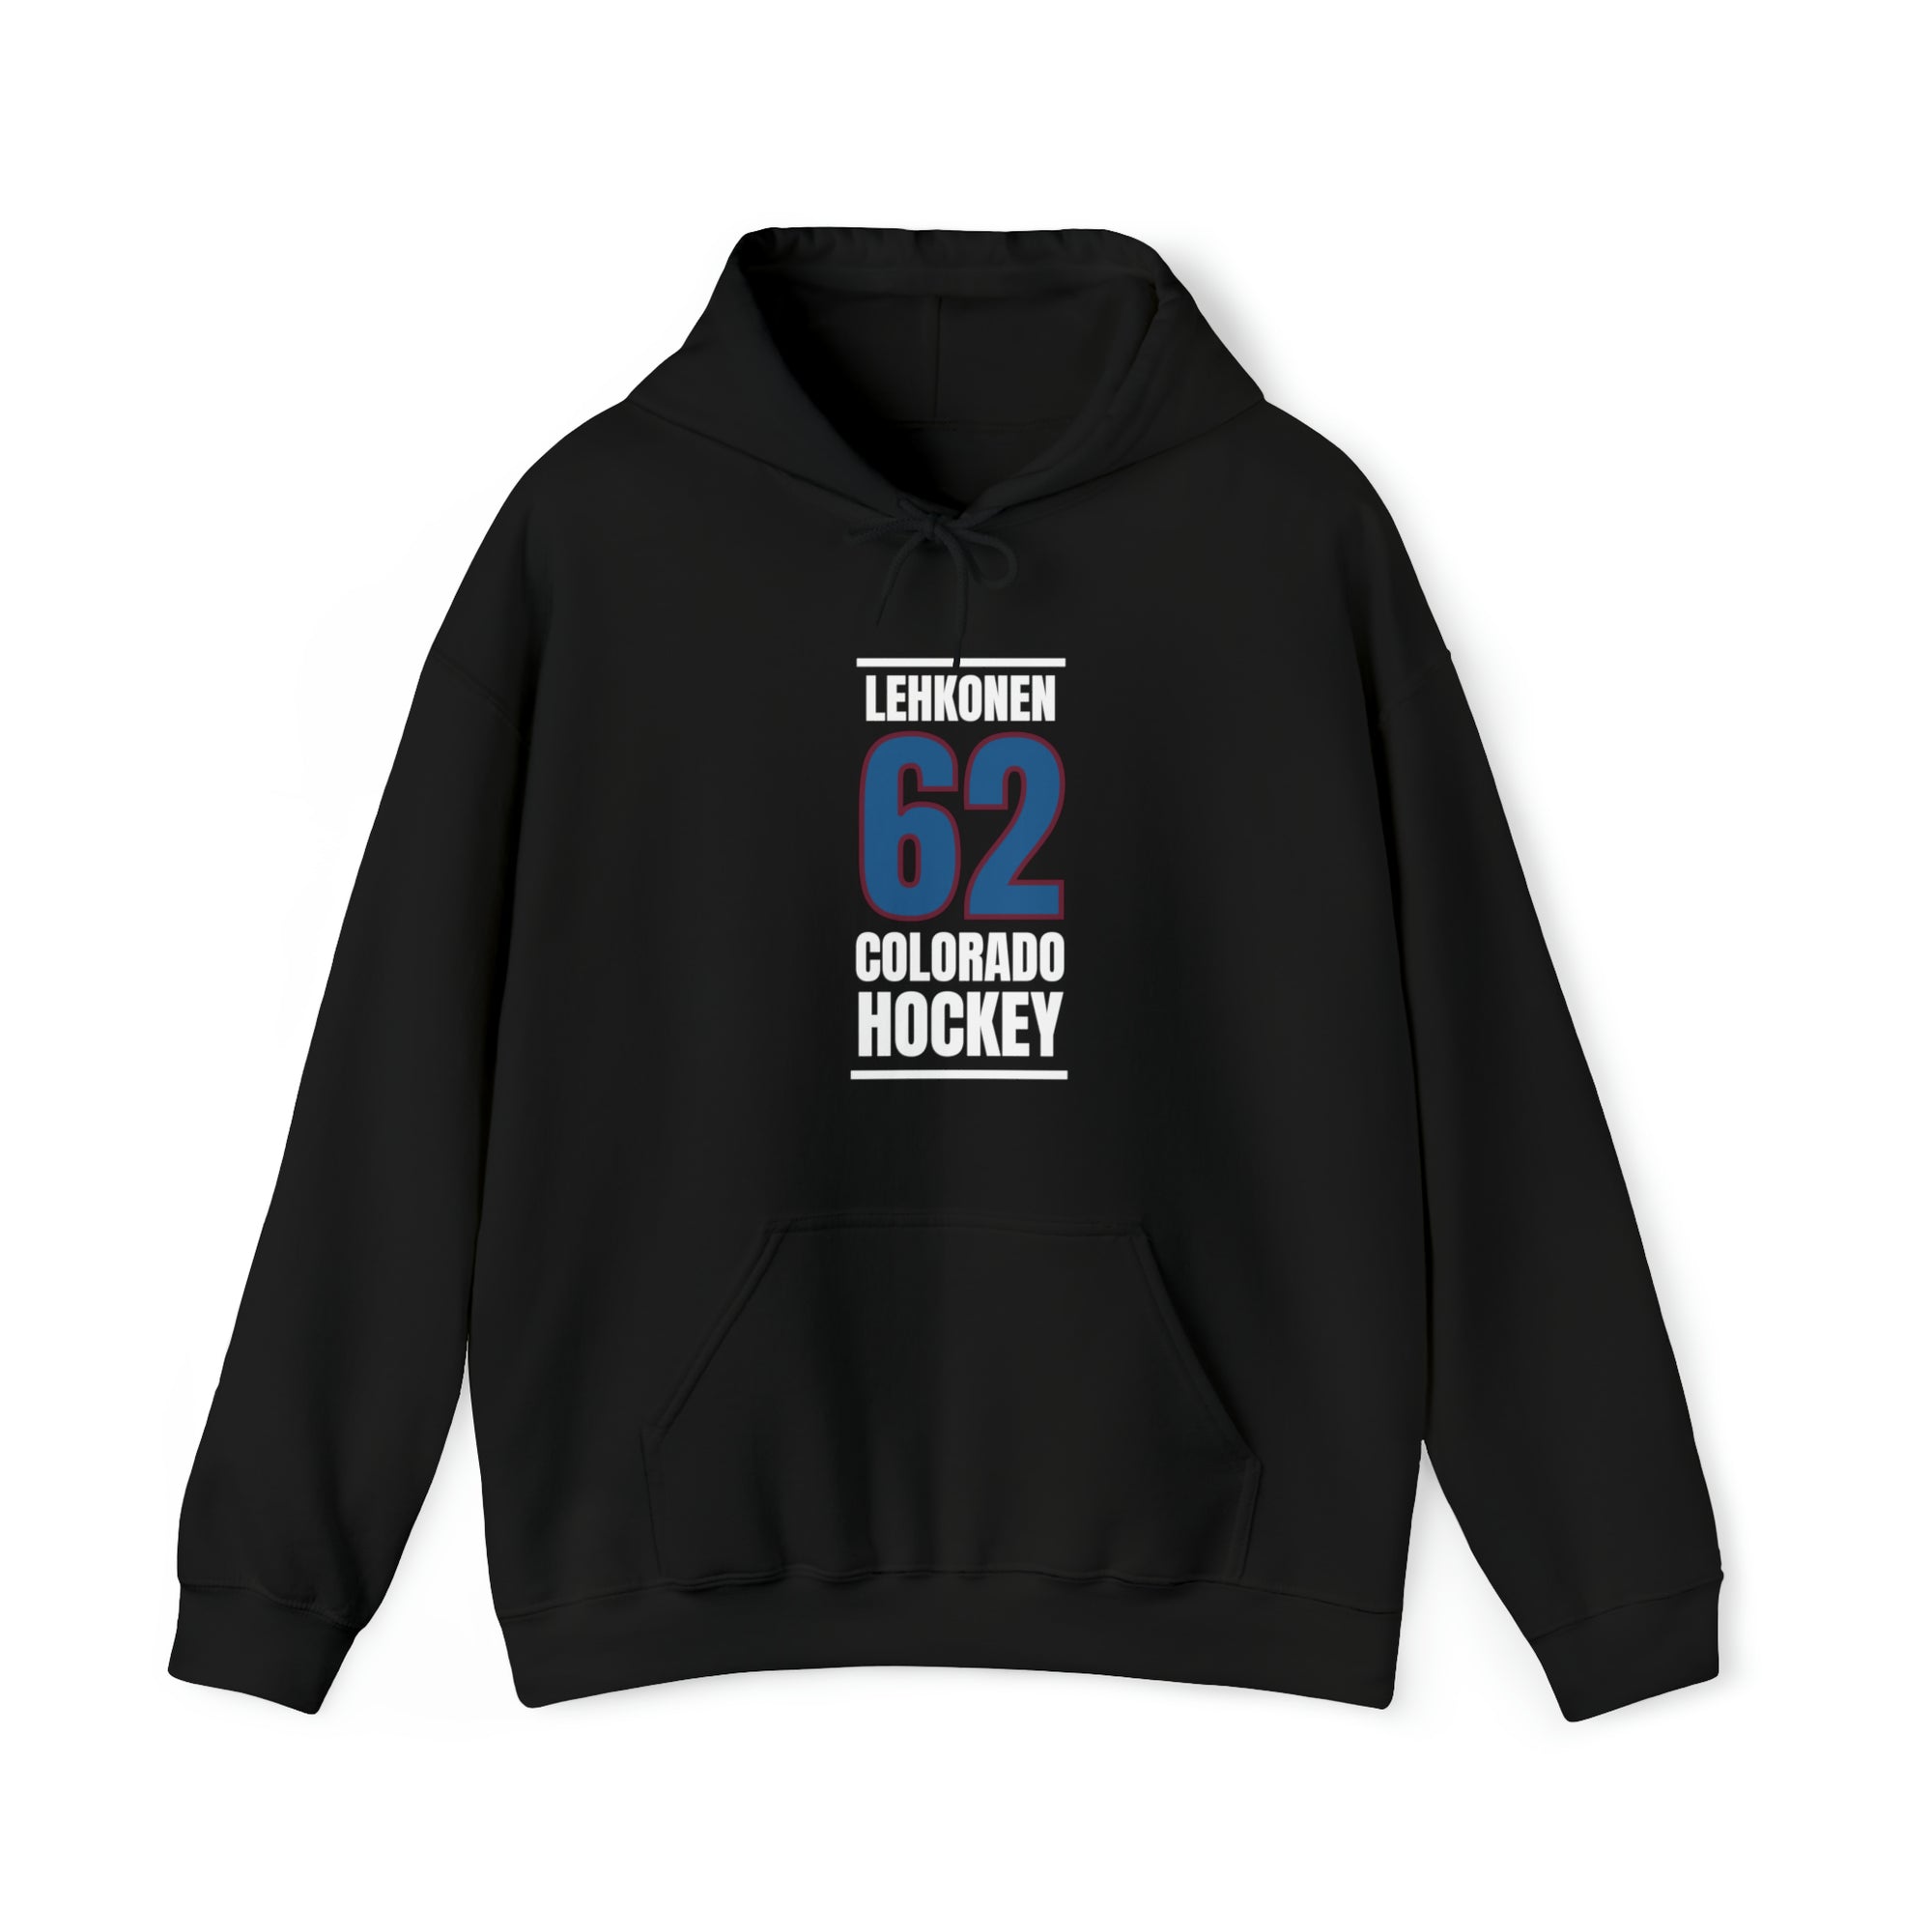 Lehkonen 62 Colorado Hockey Blue Vertical Design Unisex Hooded Sweatshirt